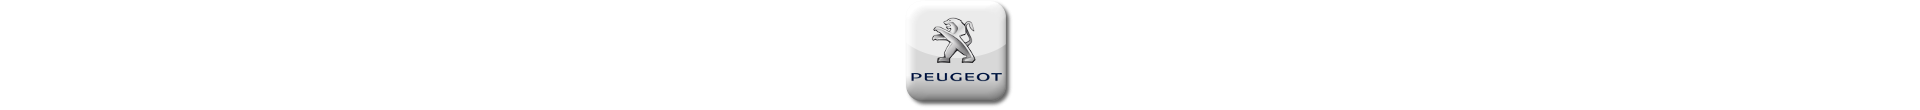 Boitier additionnel Peugeot Diesel Evolussem